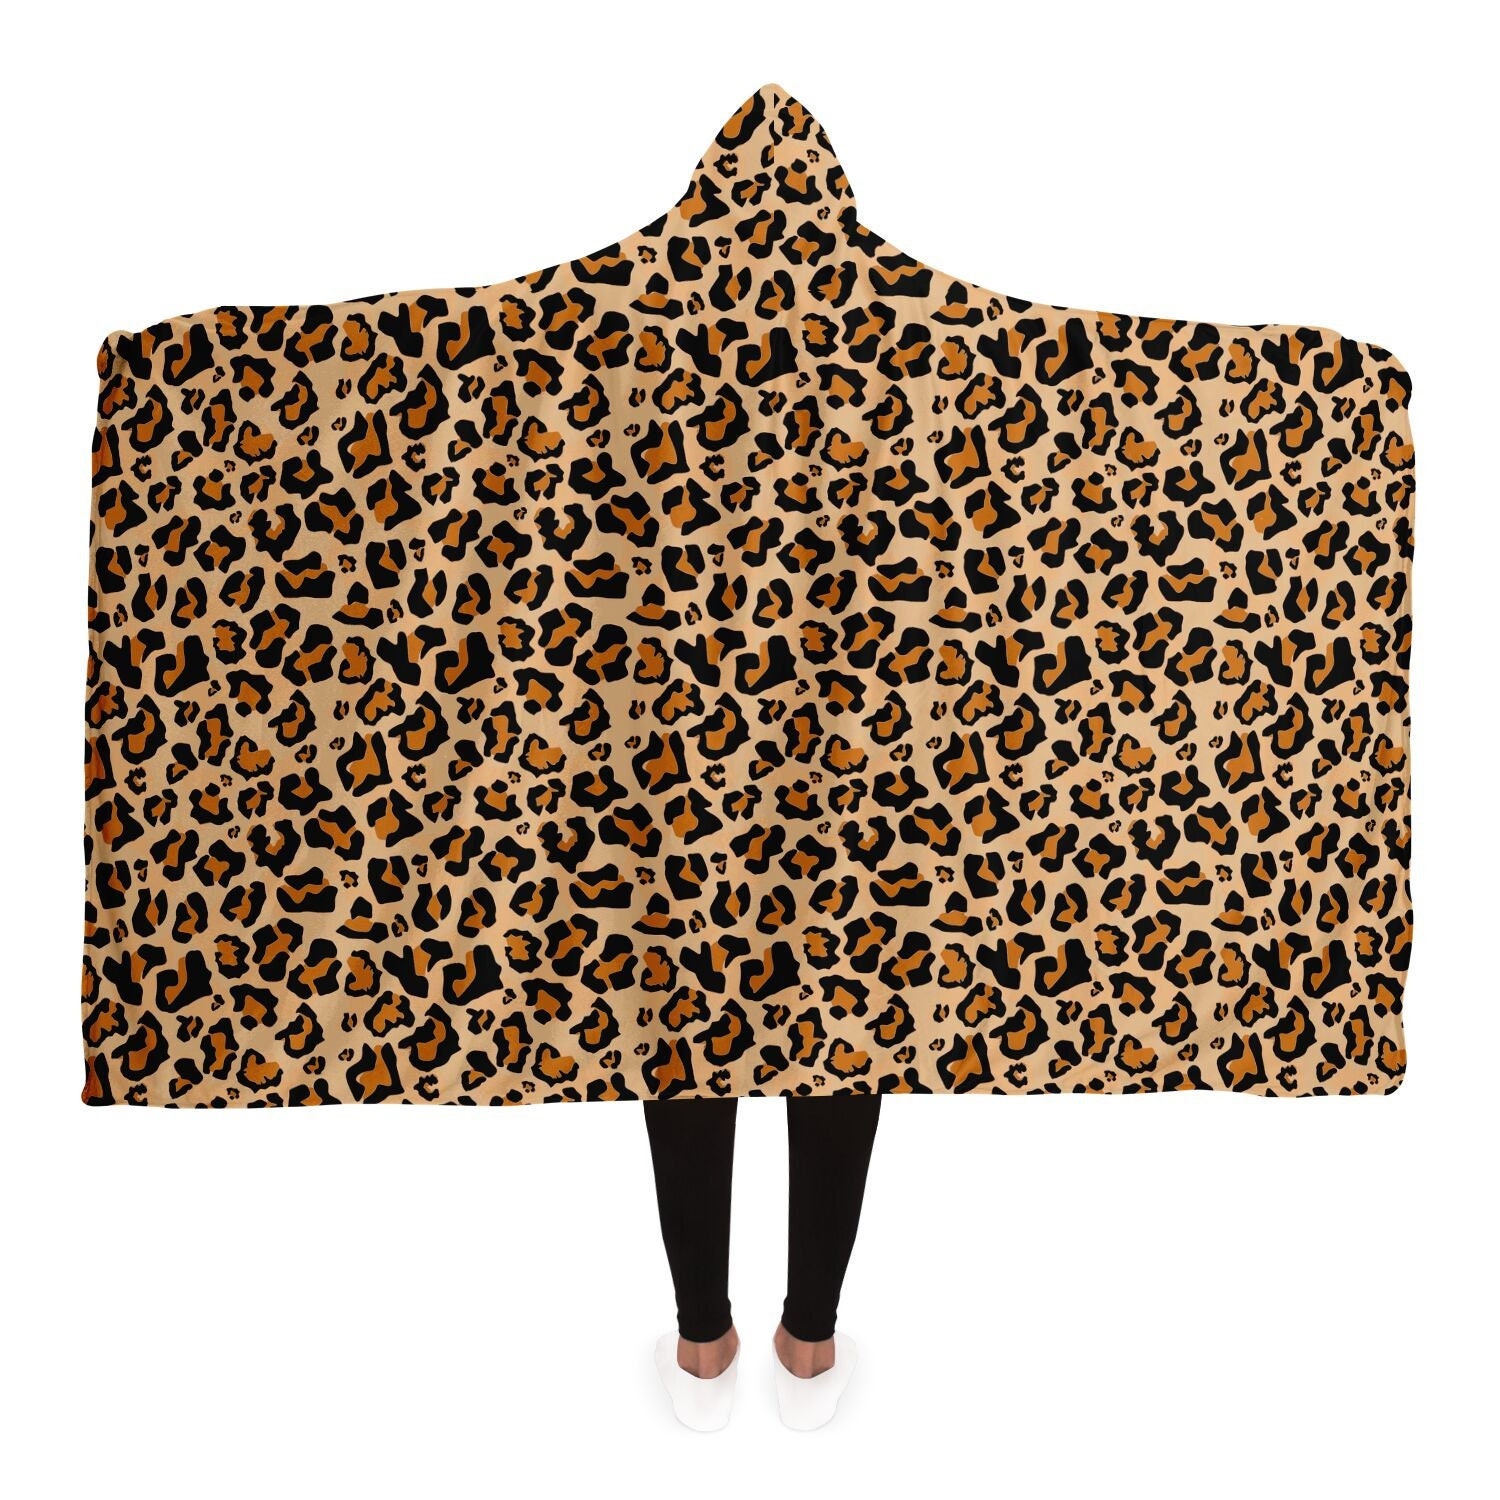 Discover Leopard Hooded Blanket, Animal Print Cheetah Sherpa Fleece Soft Fluffy Cozy Warm Adult Men Women Kids Large Gift